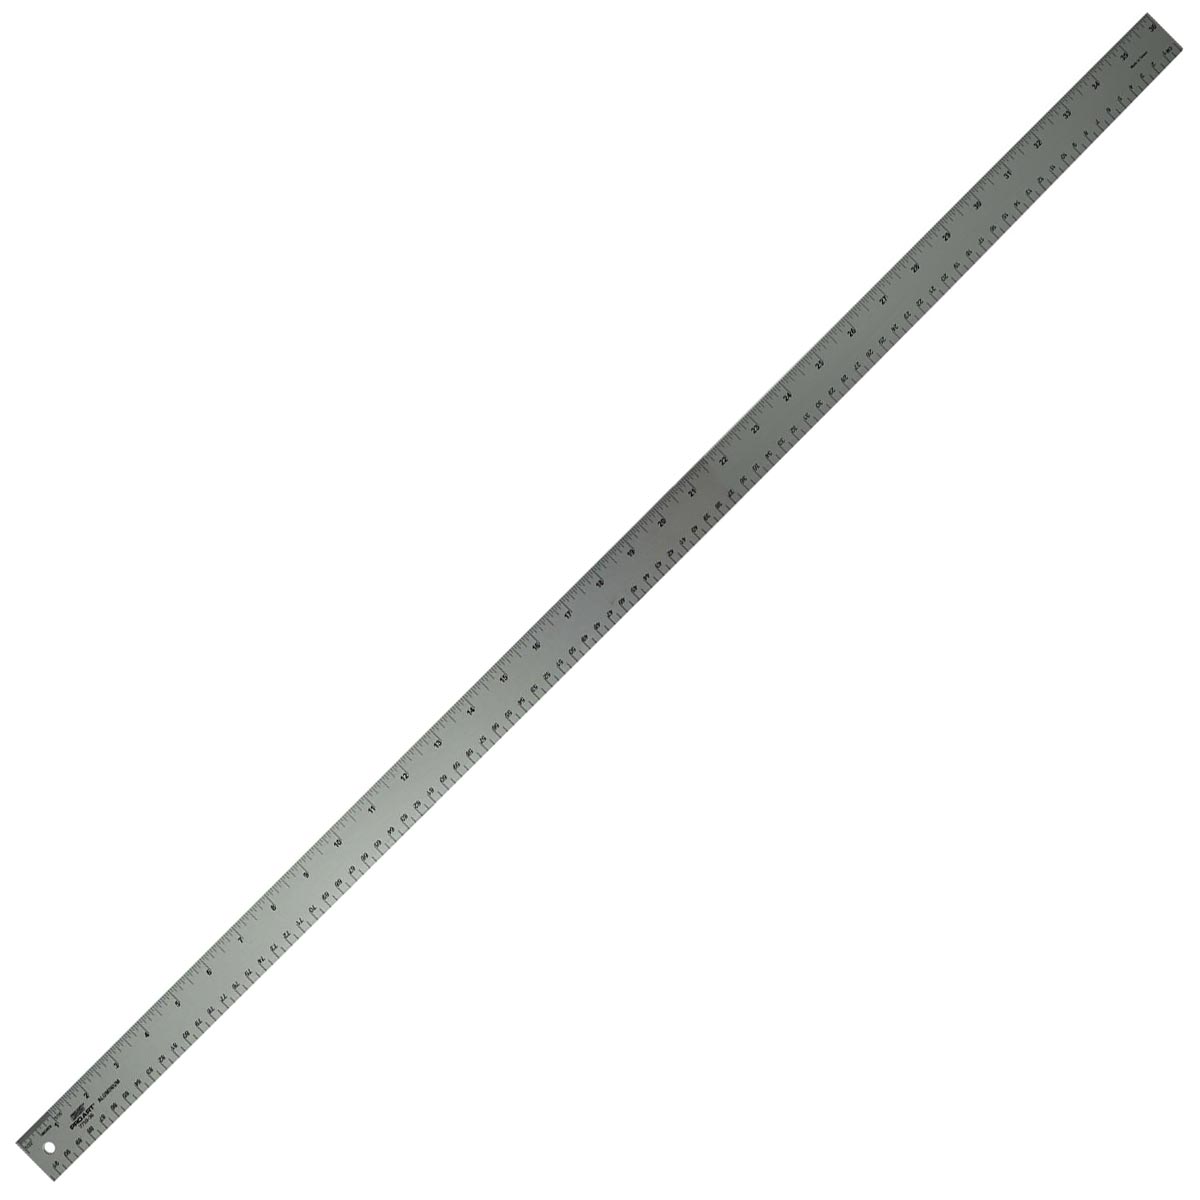 Pro Art Aluminum Straight Edge Ruler 36 inches